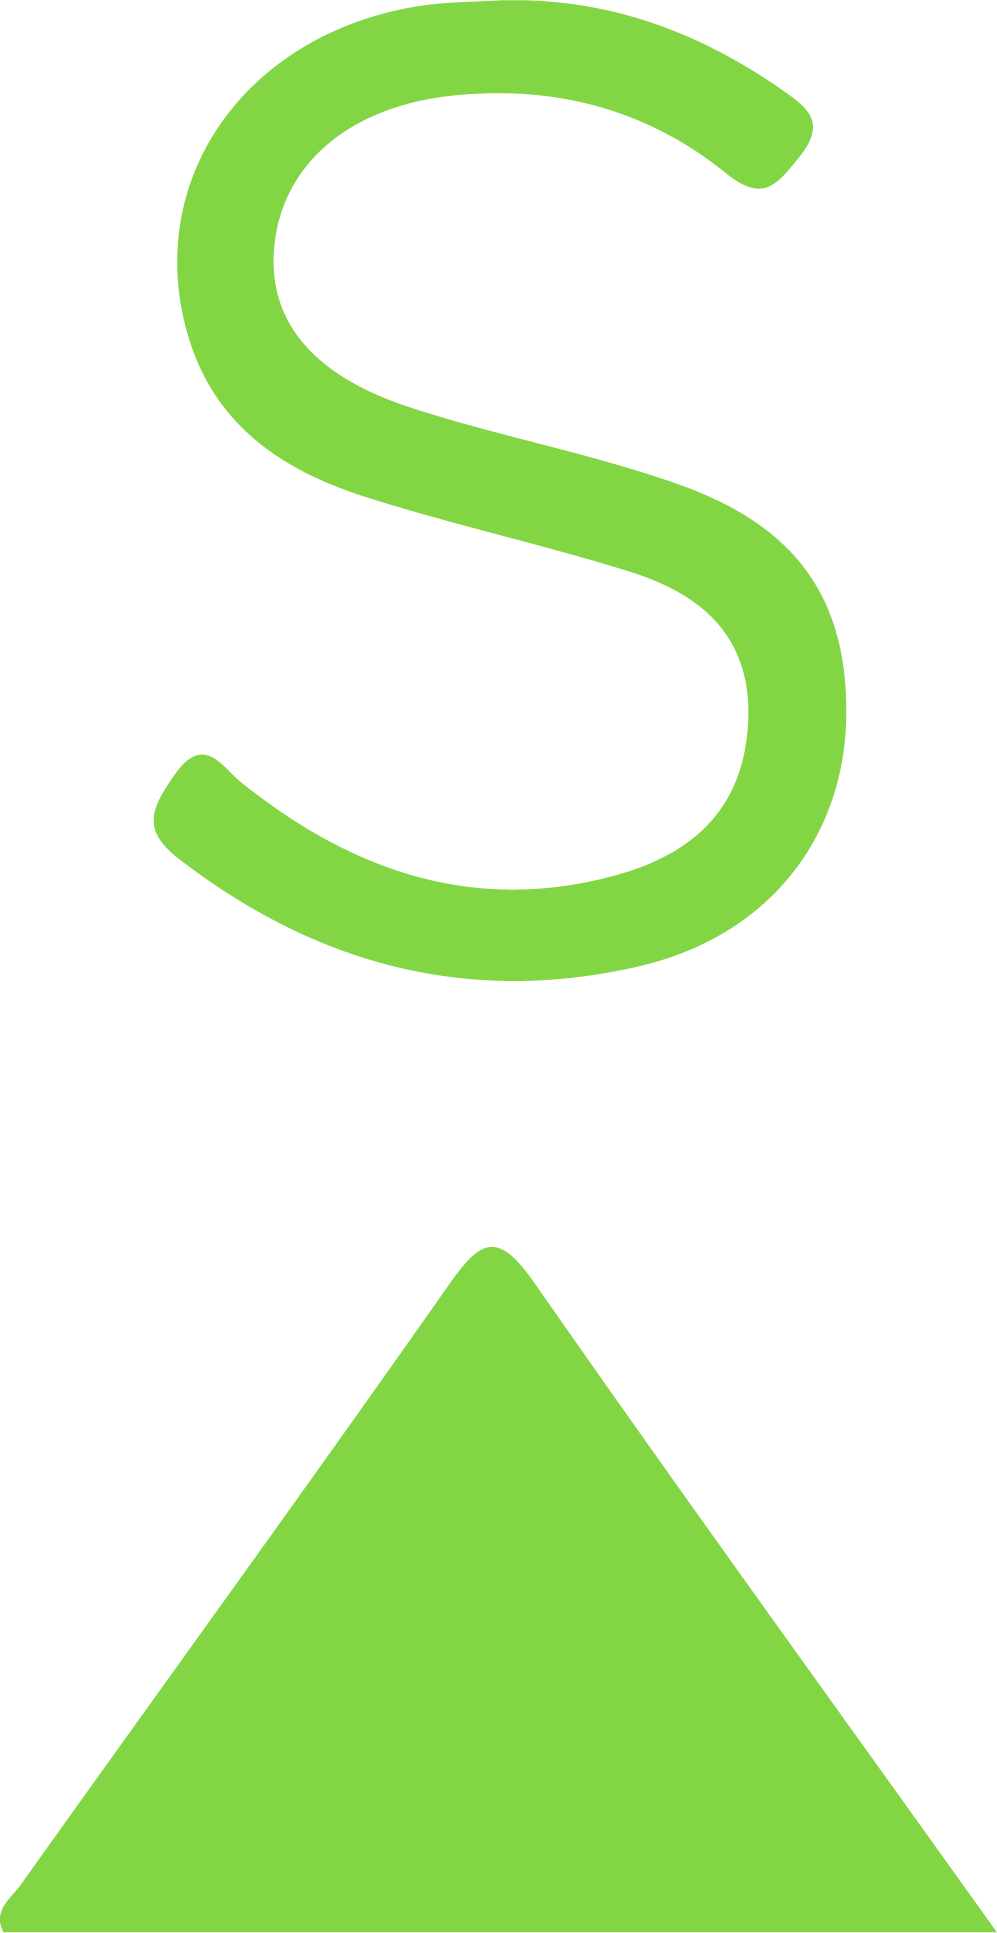 ServiceSource logo (PNG transparent)